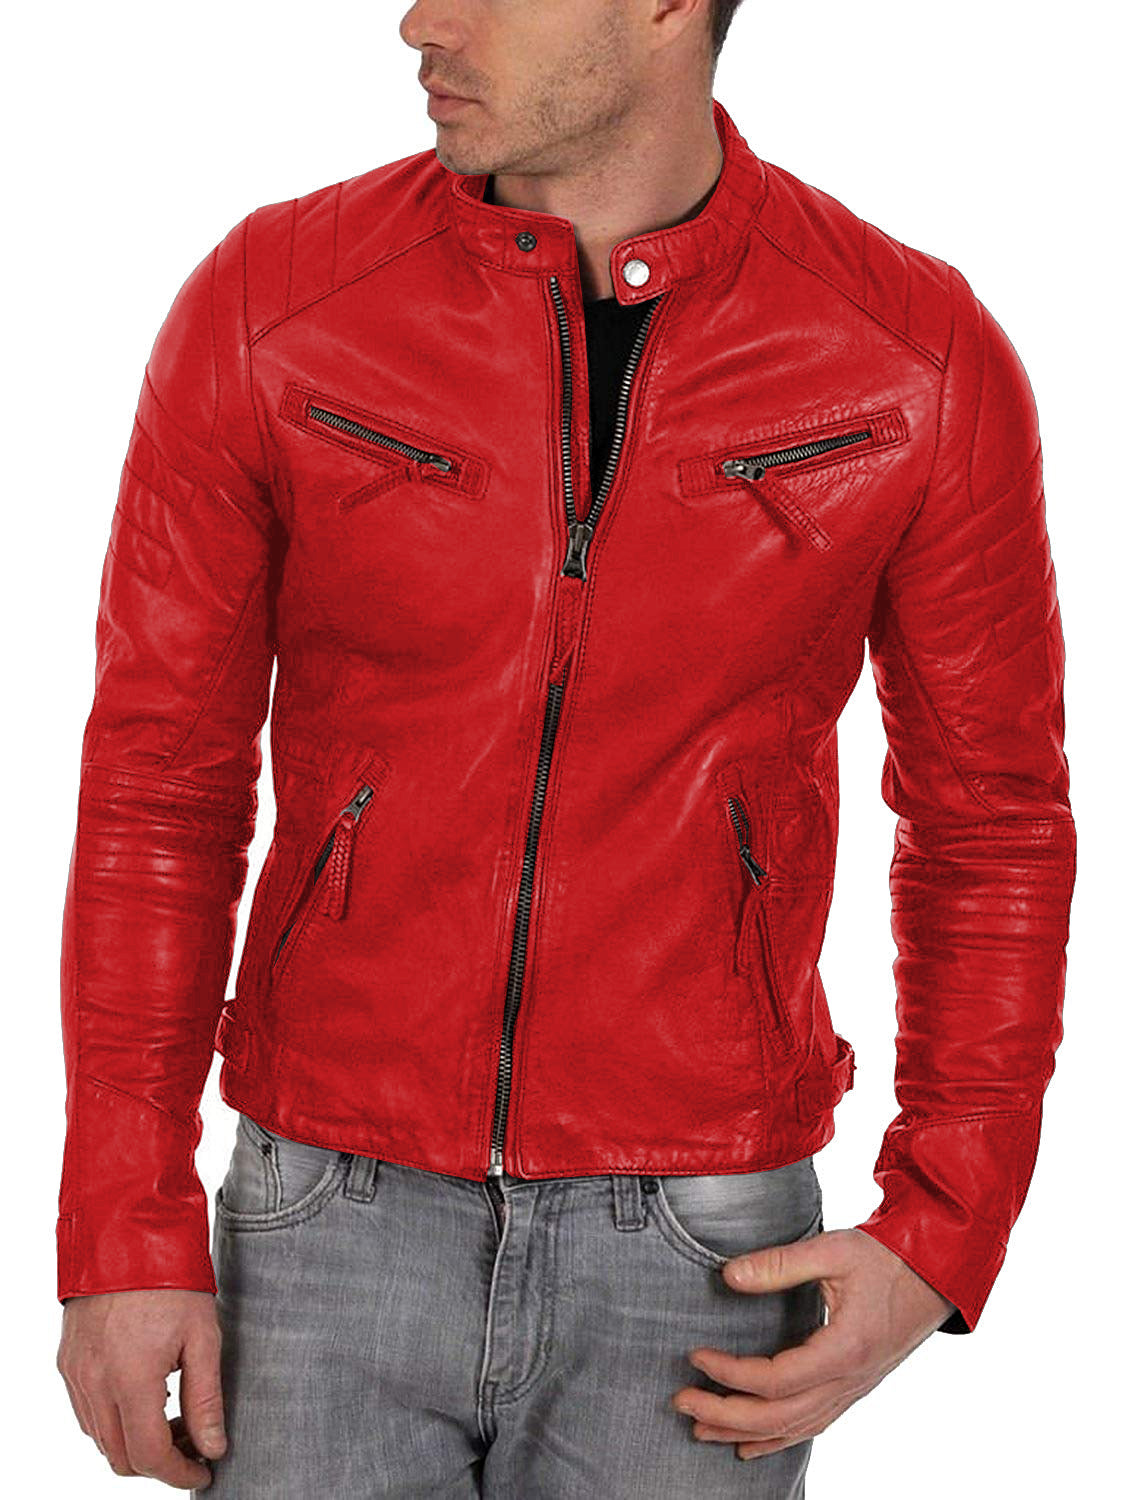 Leather Jackets Hub Mens Genuine Lambskin Leather Jacket (Black, Classic Jacket) - 1501268